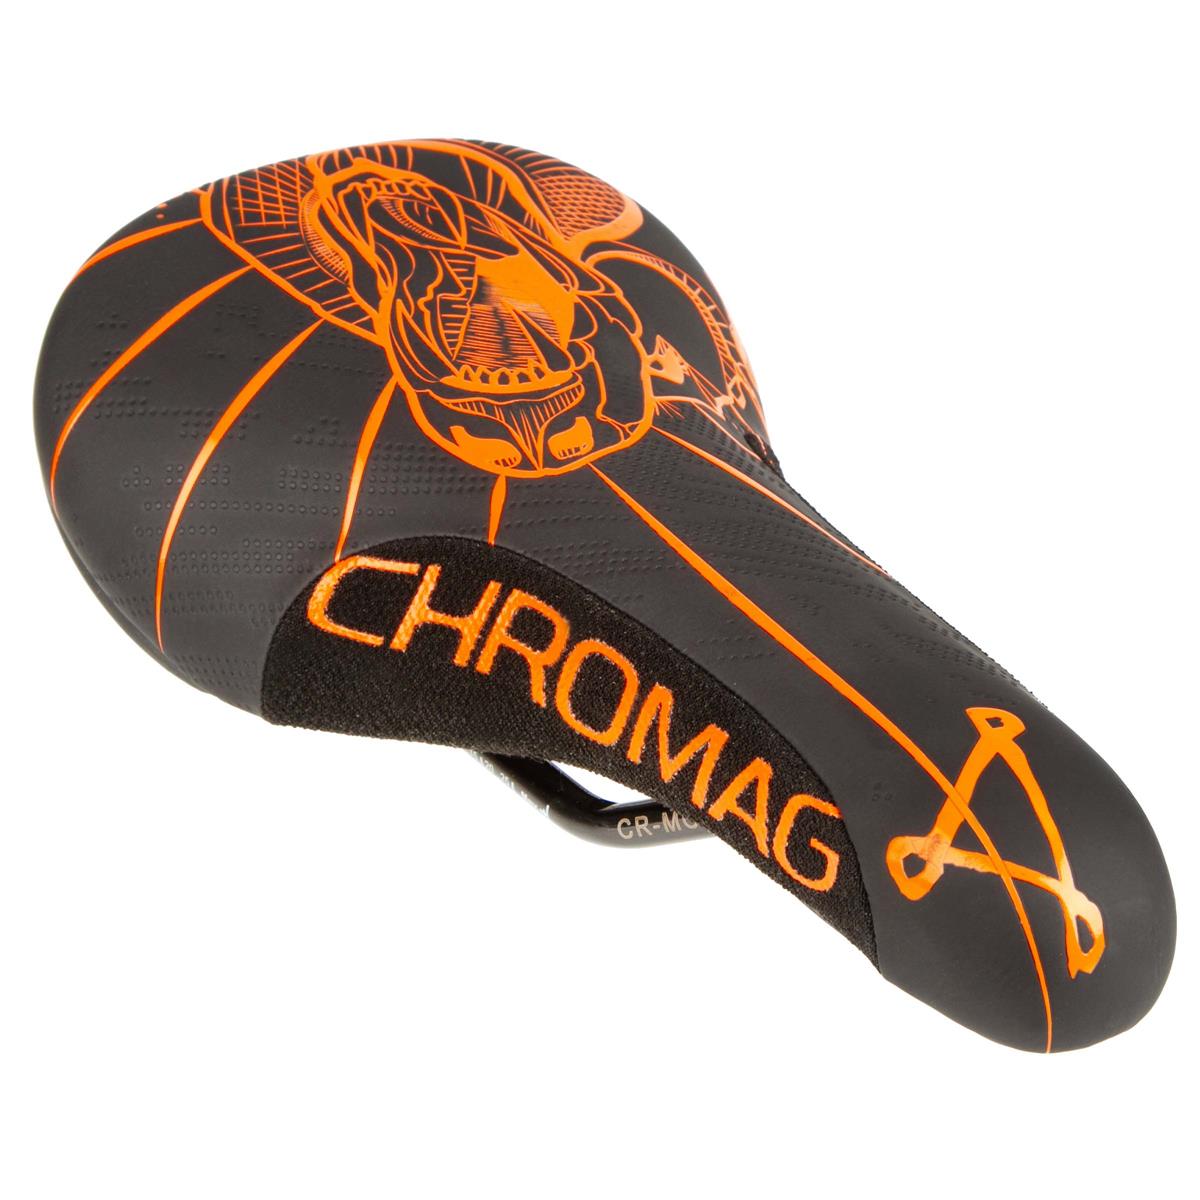 Chromag Saddle Overture 2019 243 x 136 mm, Black/Tight Orange